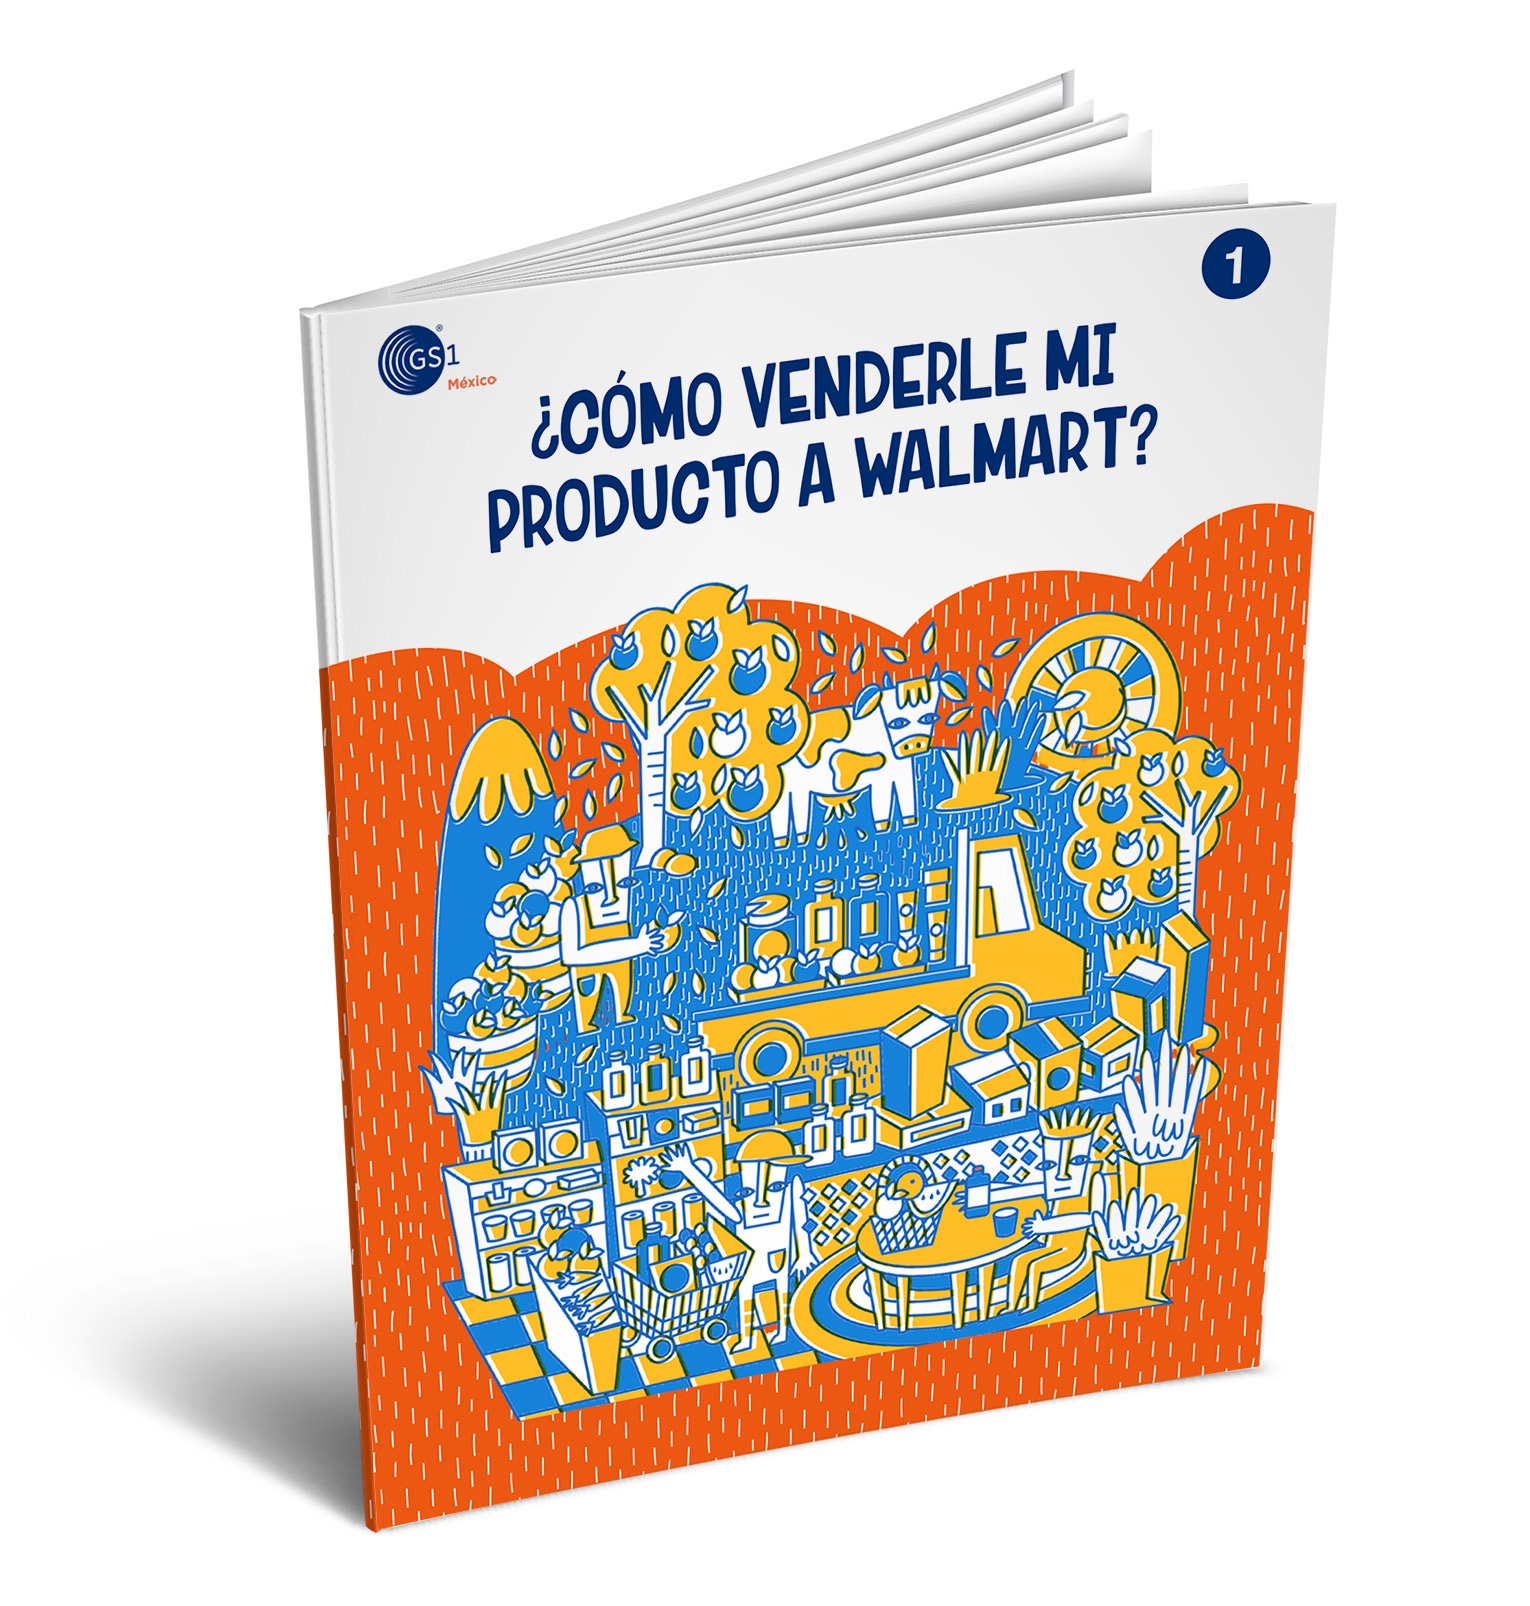 Portada Walmart Cómo Vender mi producto a Walmart GS1 Mexico 2018.jpg